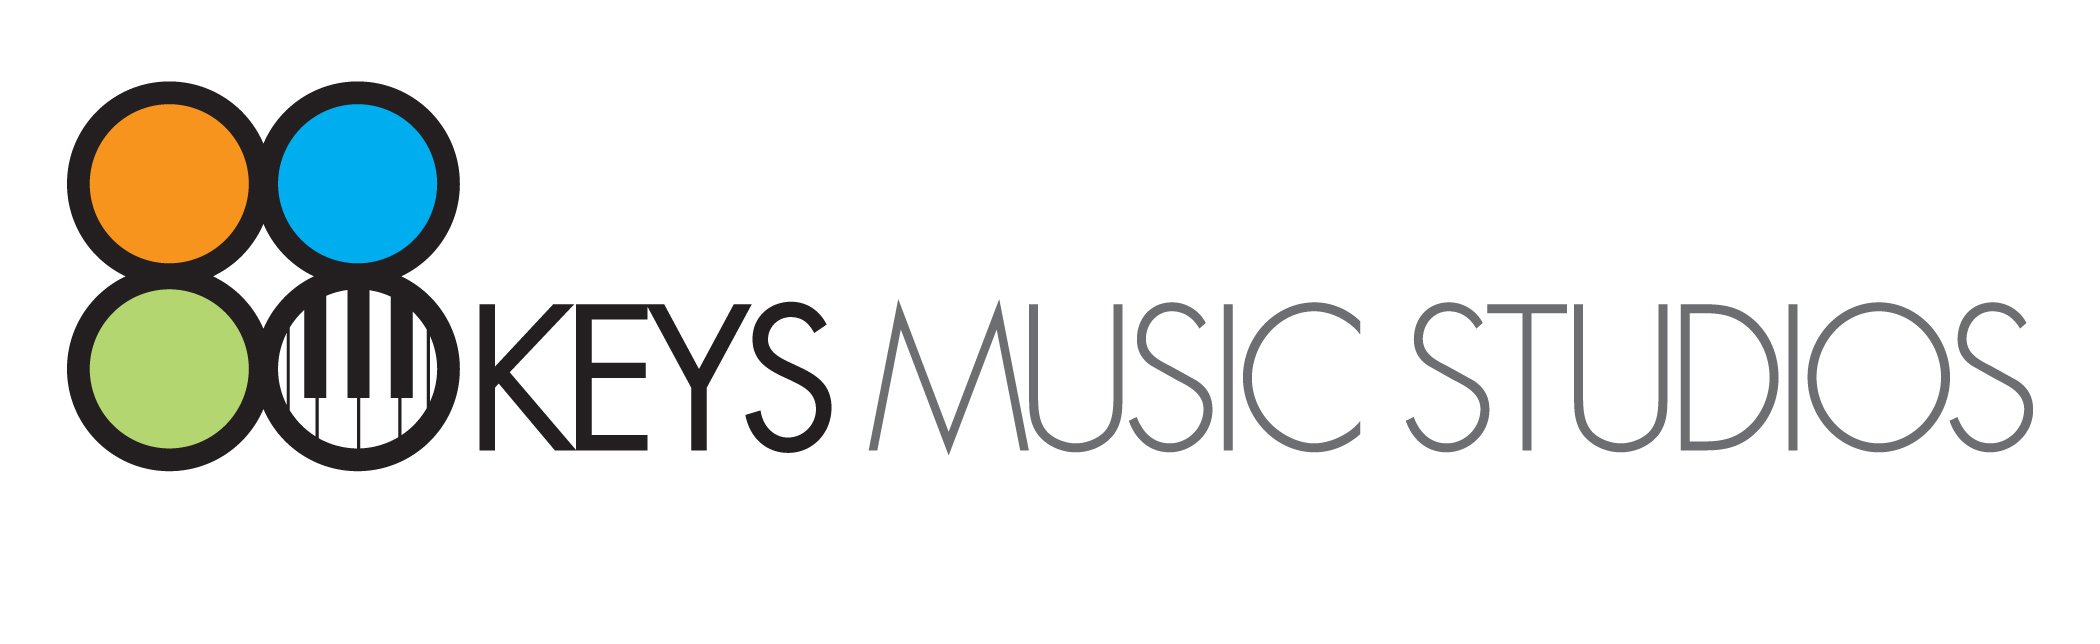 88 Keys Music Studio logo